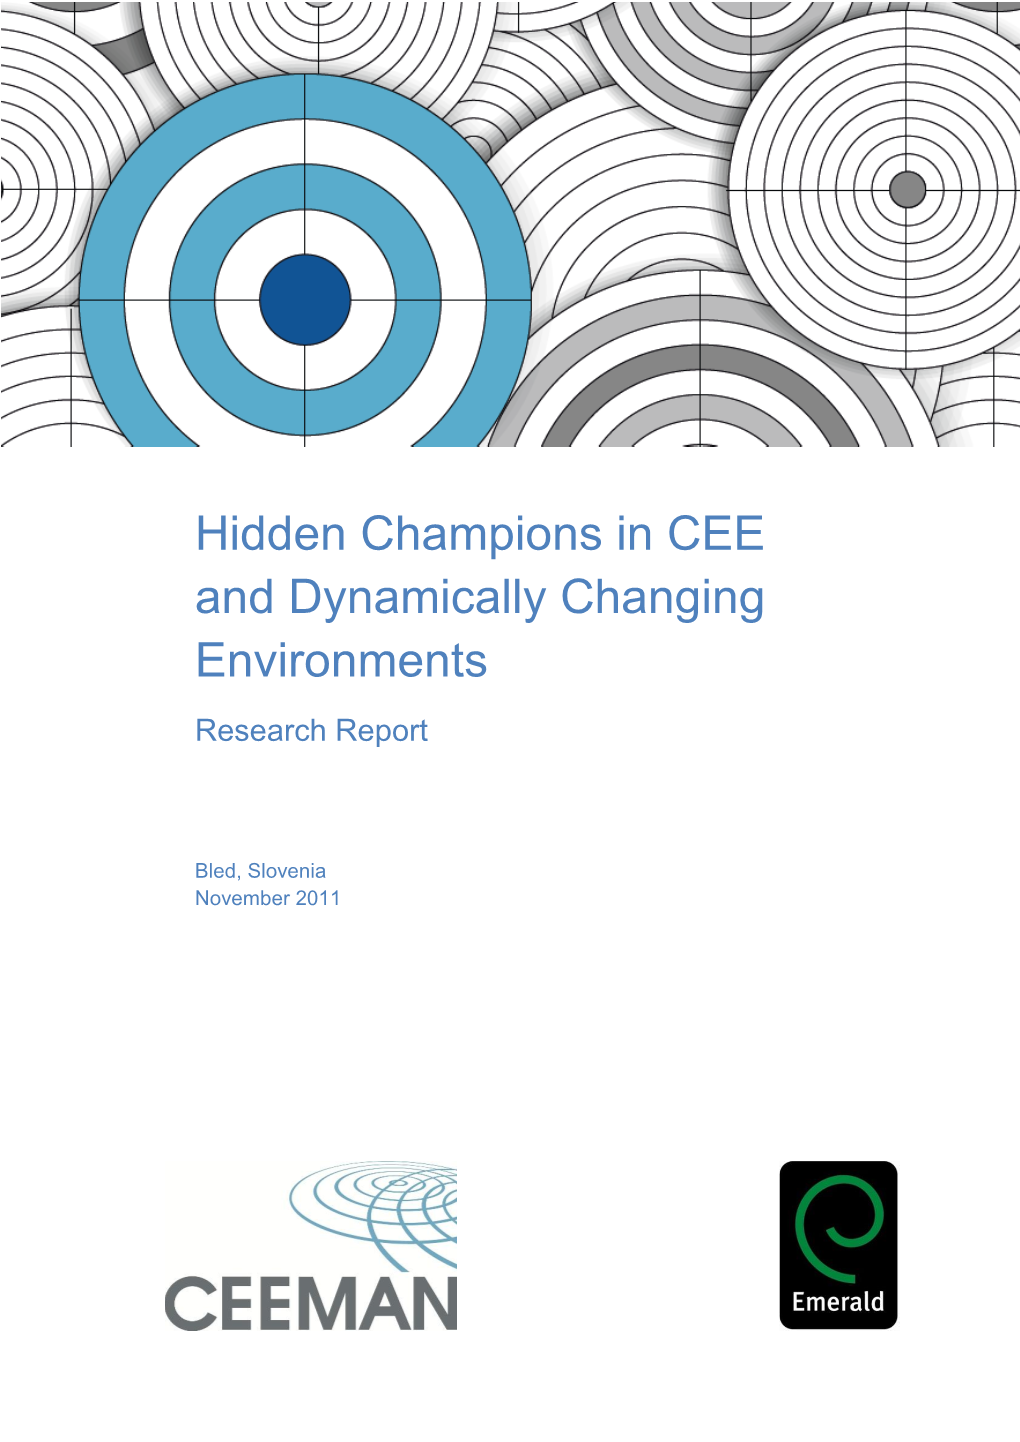 Hidden Champions Research Report 2011